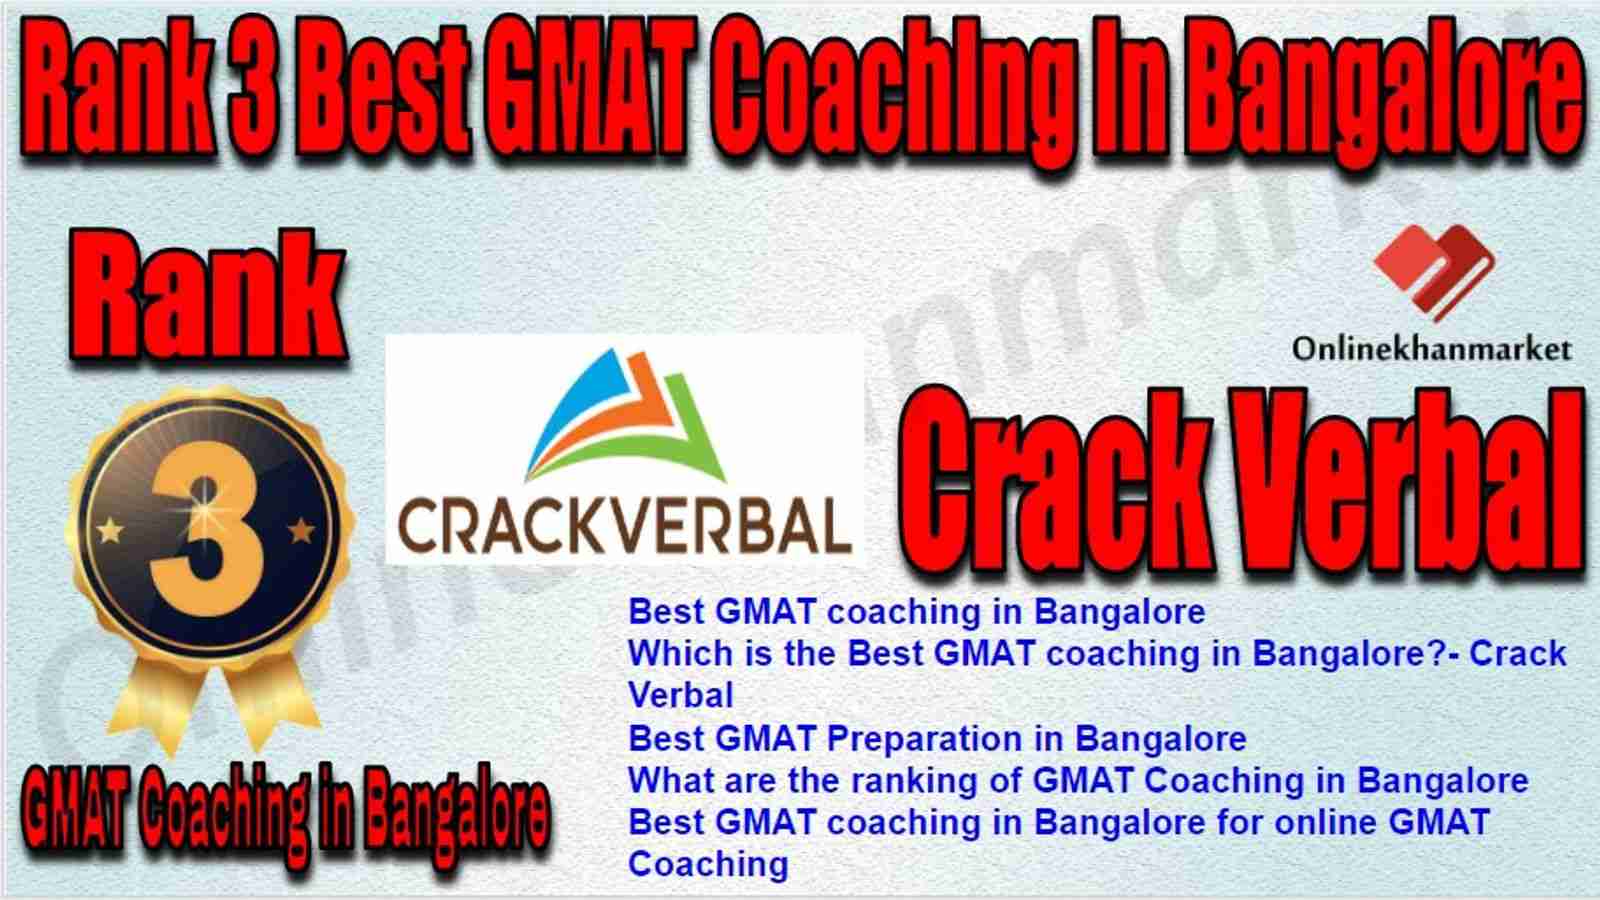 Rank 3 Best GMAT Coaching in Bangalore